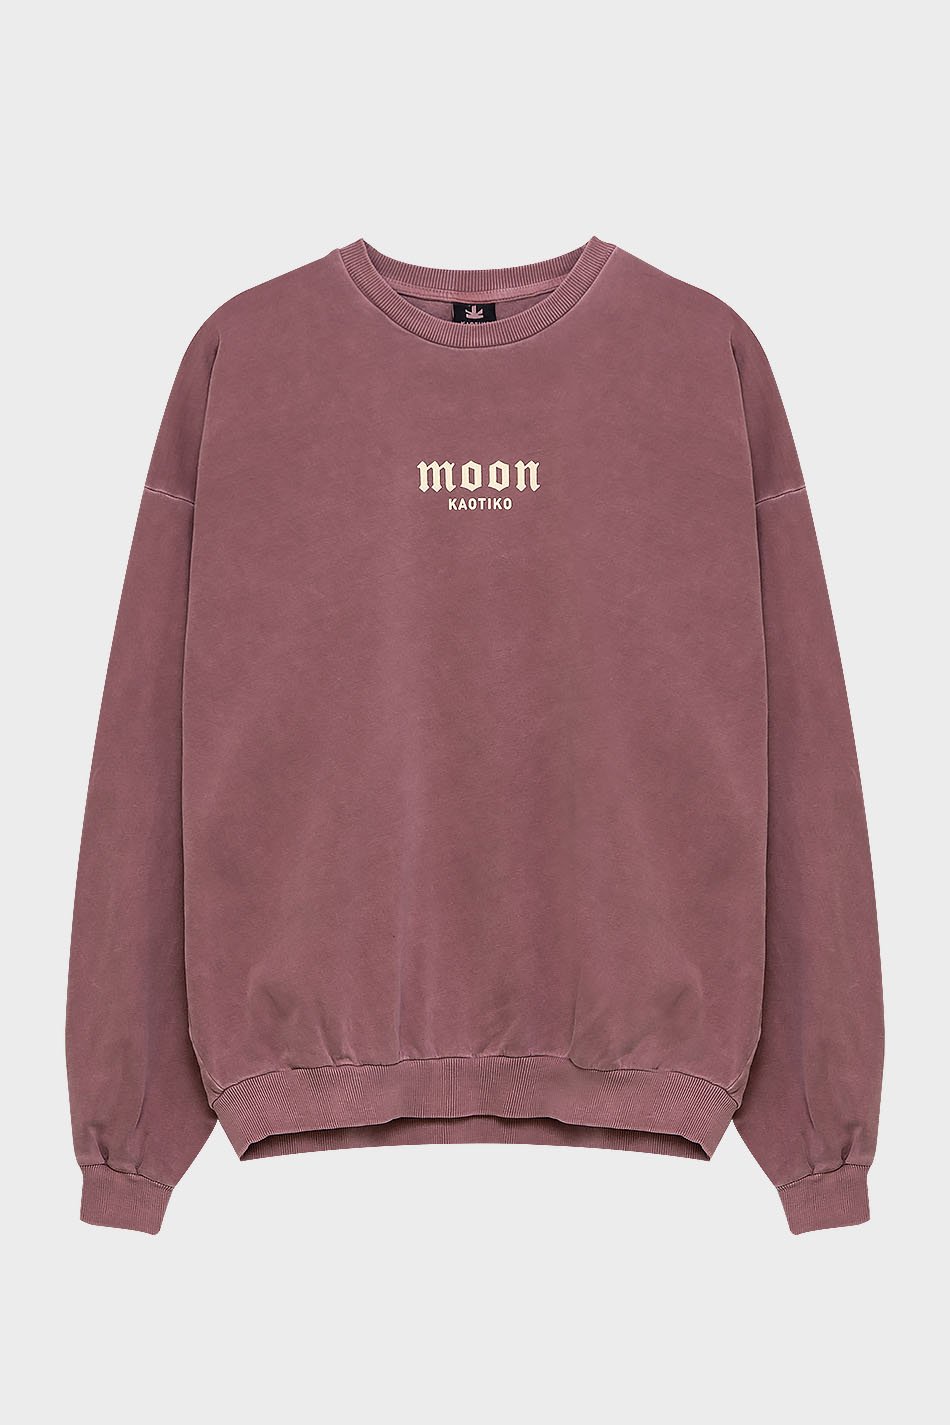 Bordeaux Washed Moon Sweatshirt